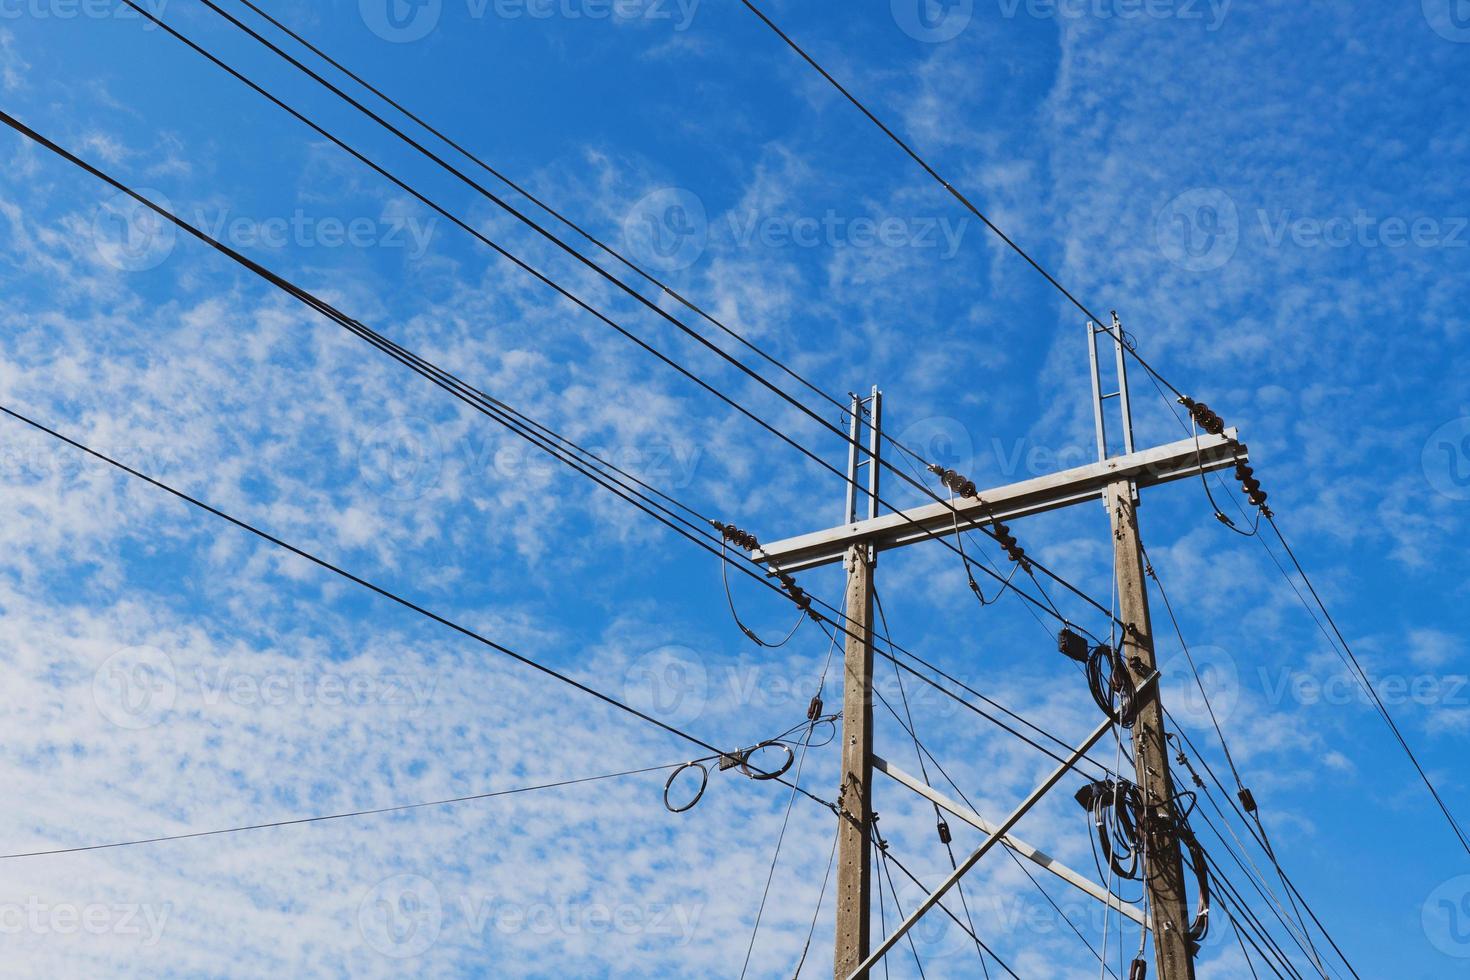 onderaanzicht van elektriciteitspaal onder bewolkte blauwe lucht foto